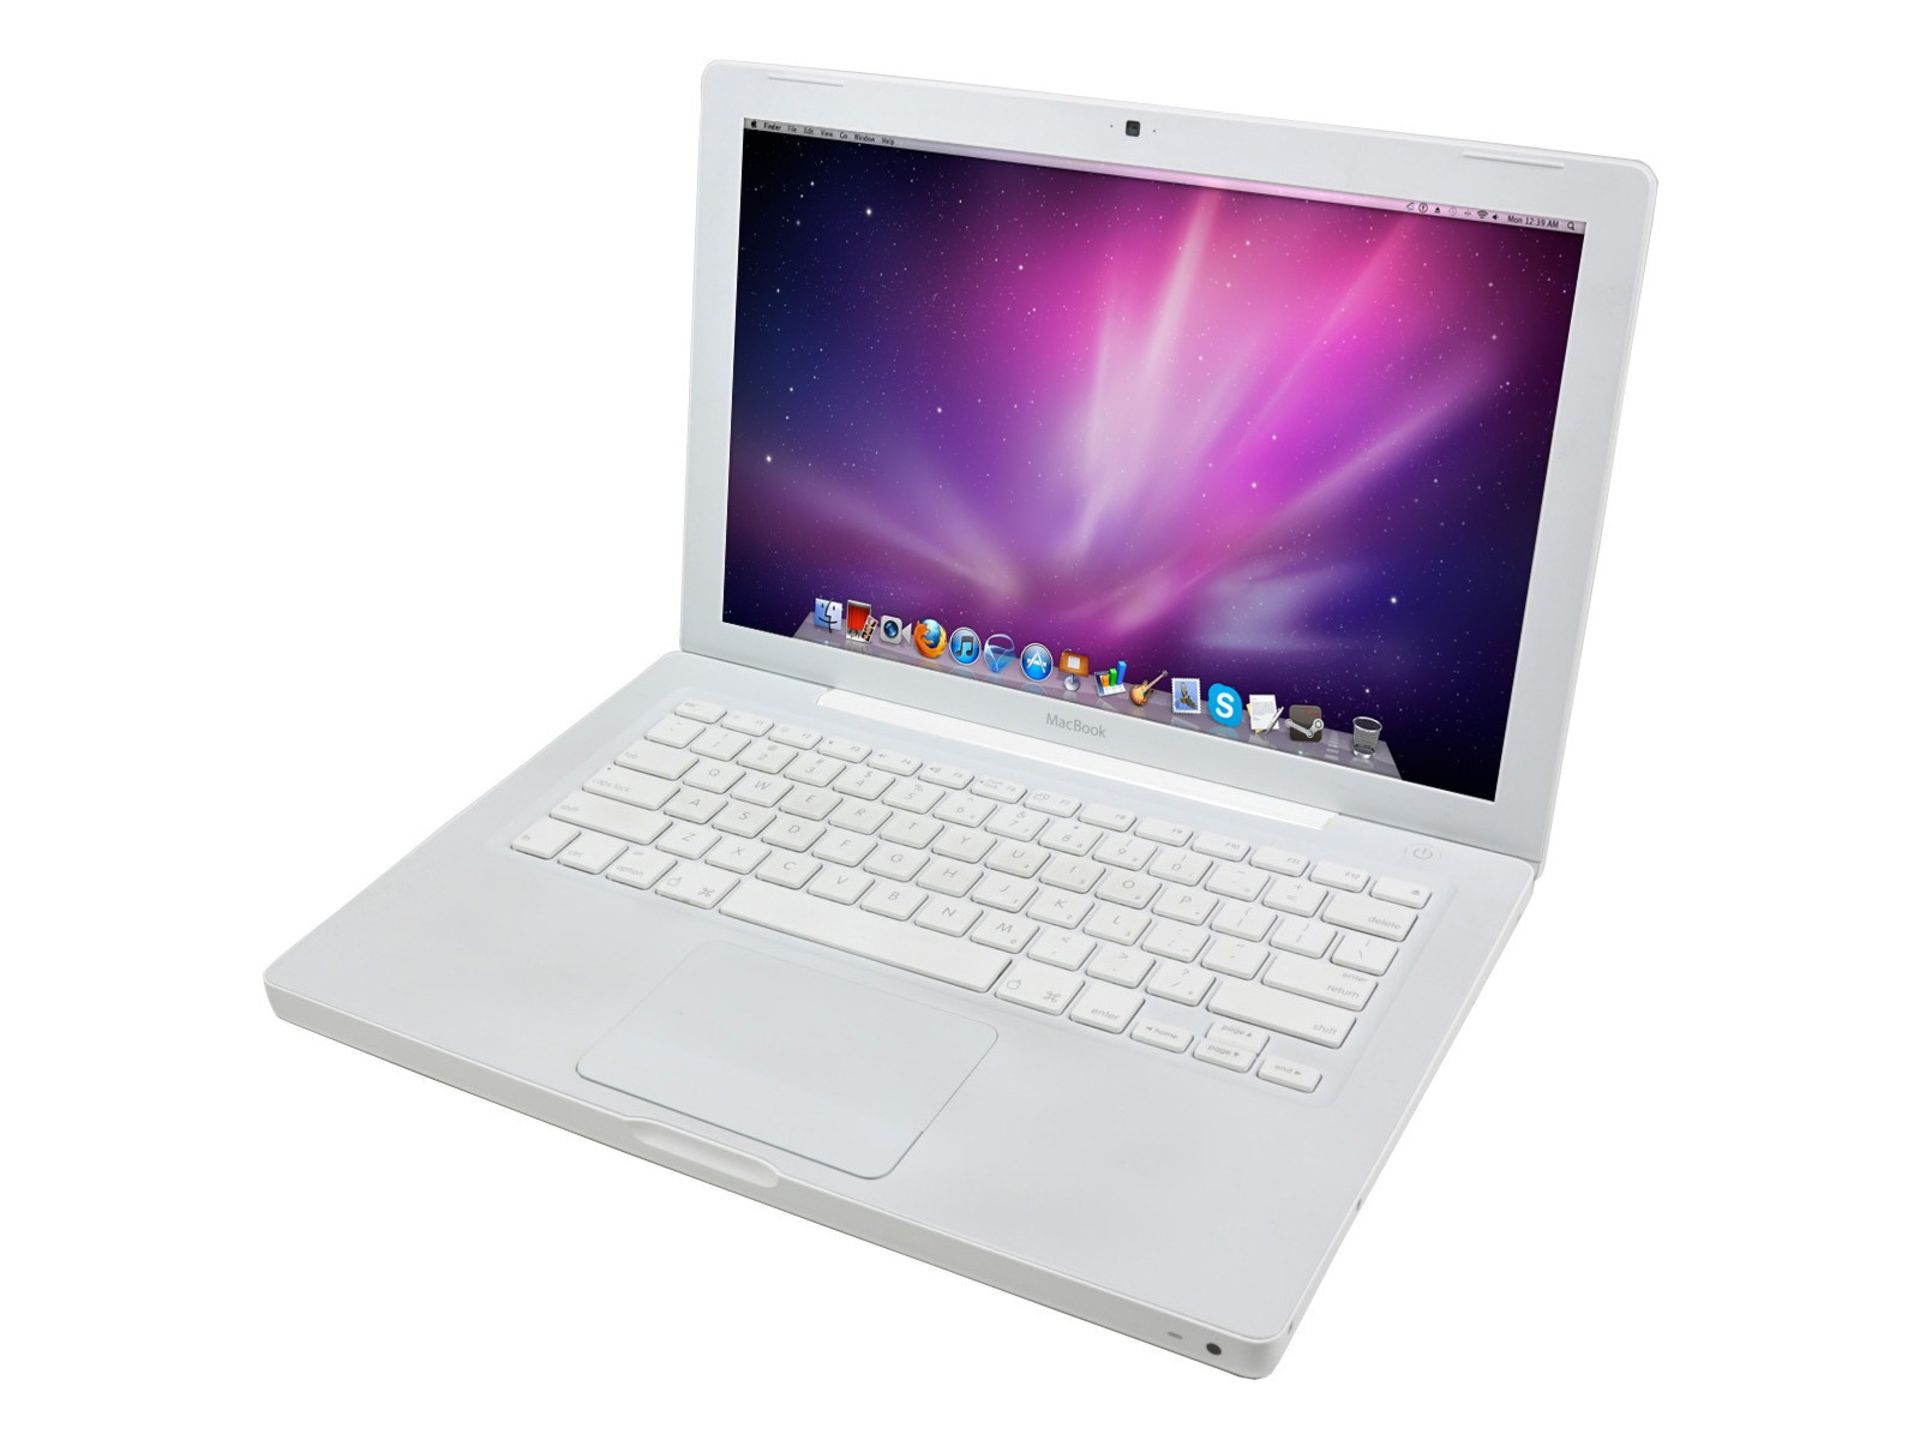 V Grade B Apple Macbook A1181 - 2GB RAM - 160GB HD - Core 2 Duo - 13" Display - Original Charger -